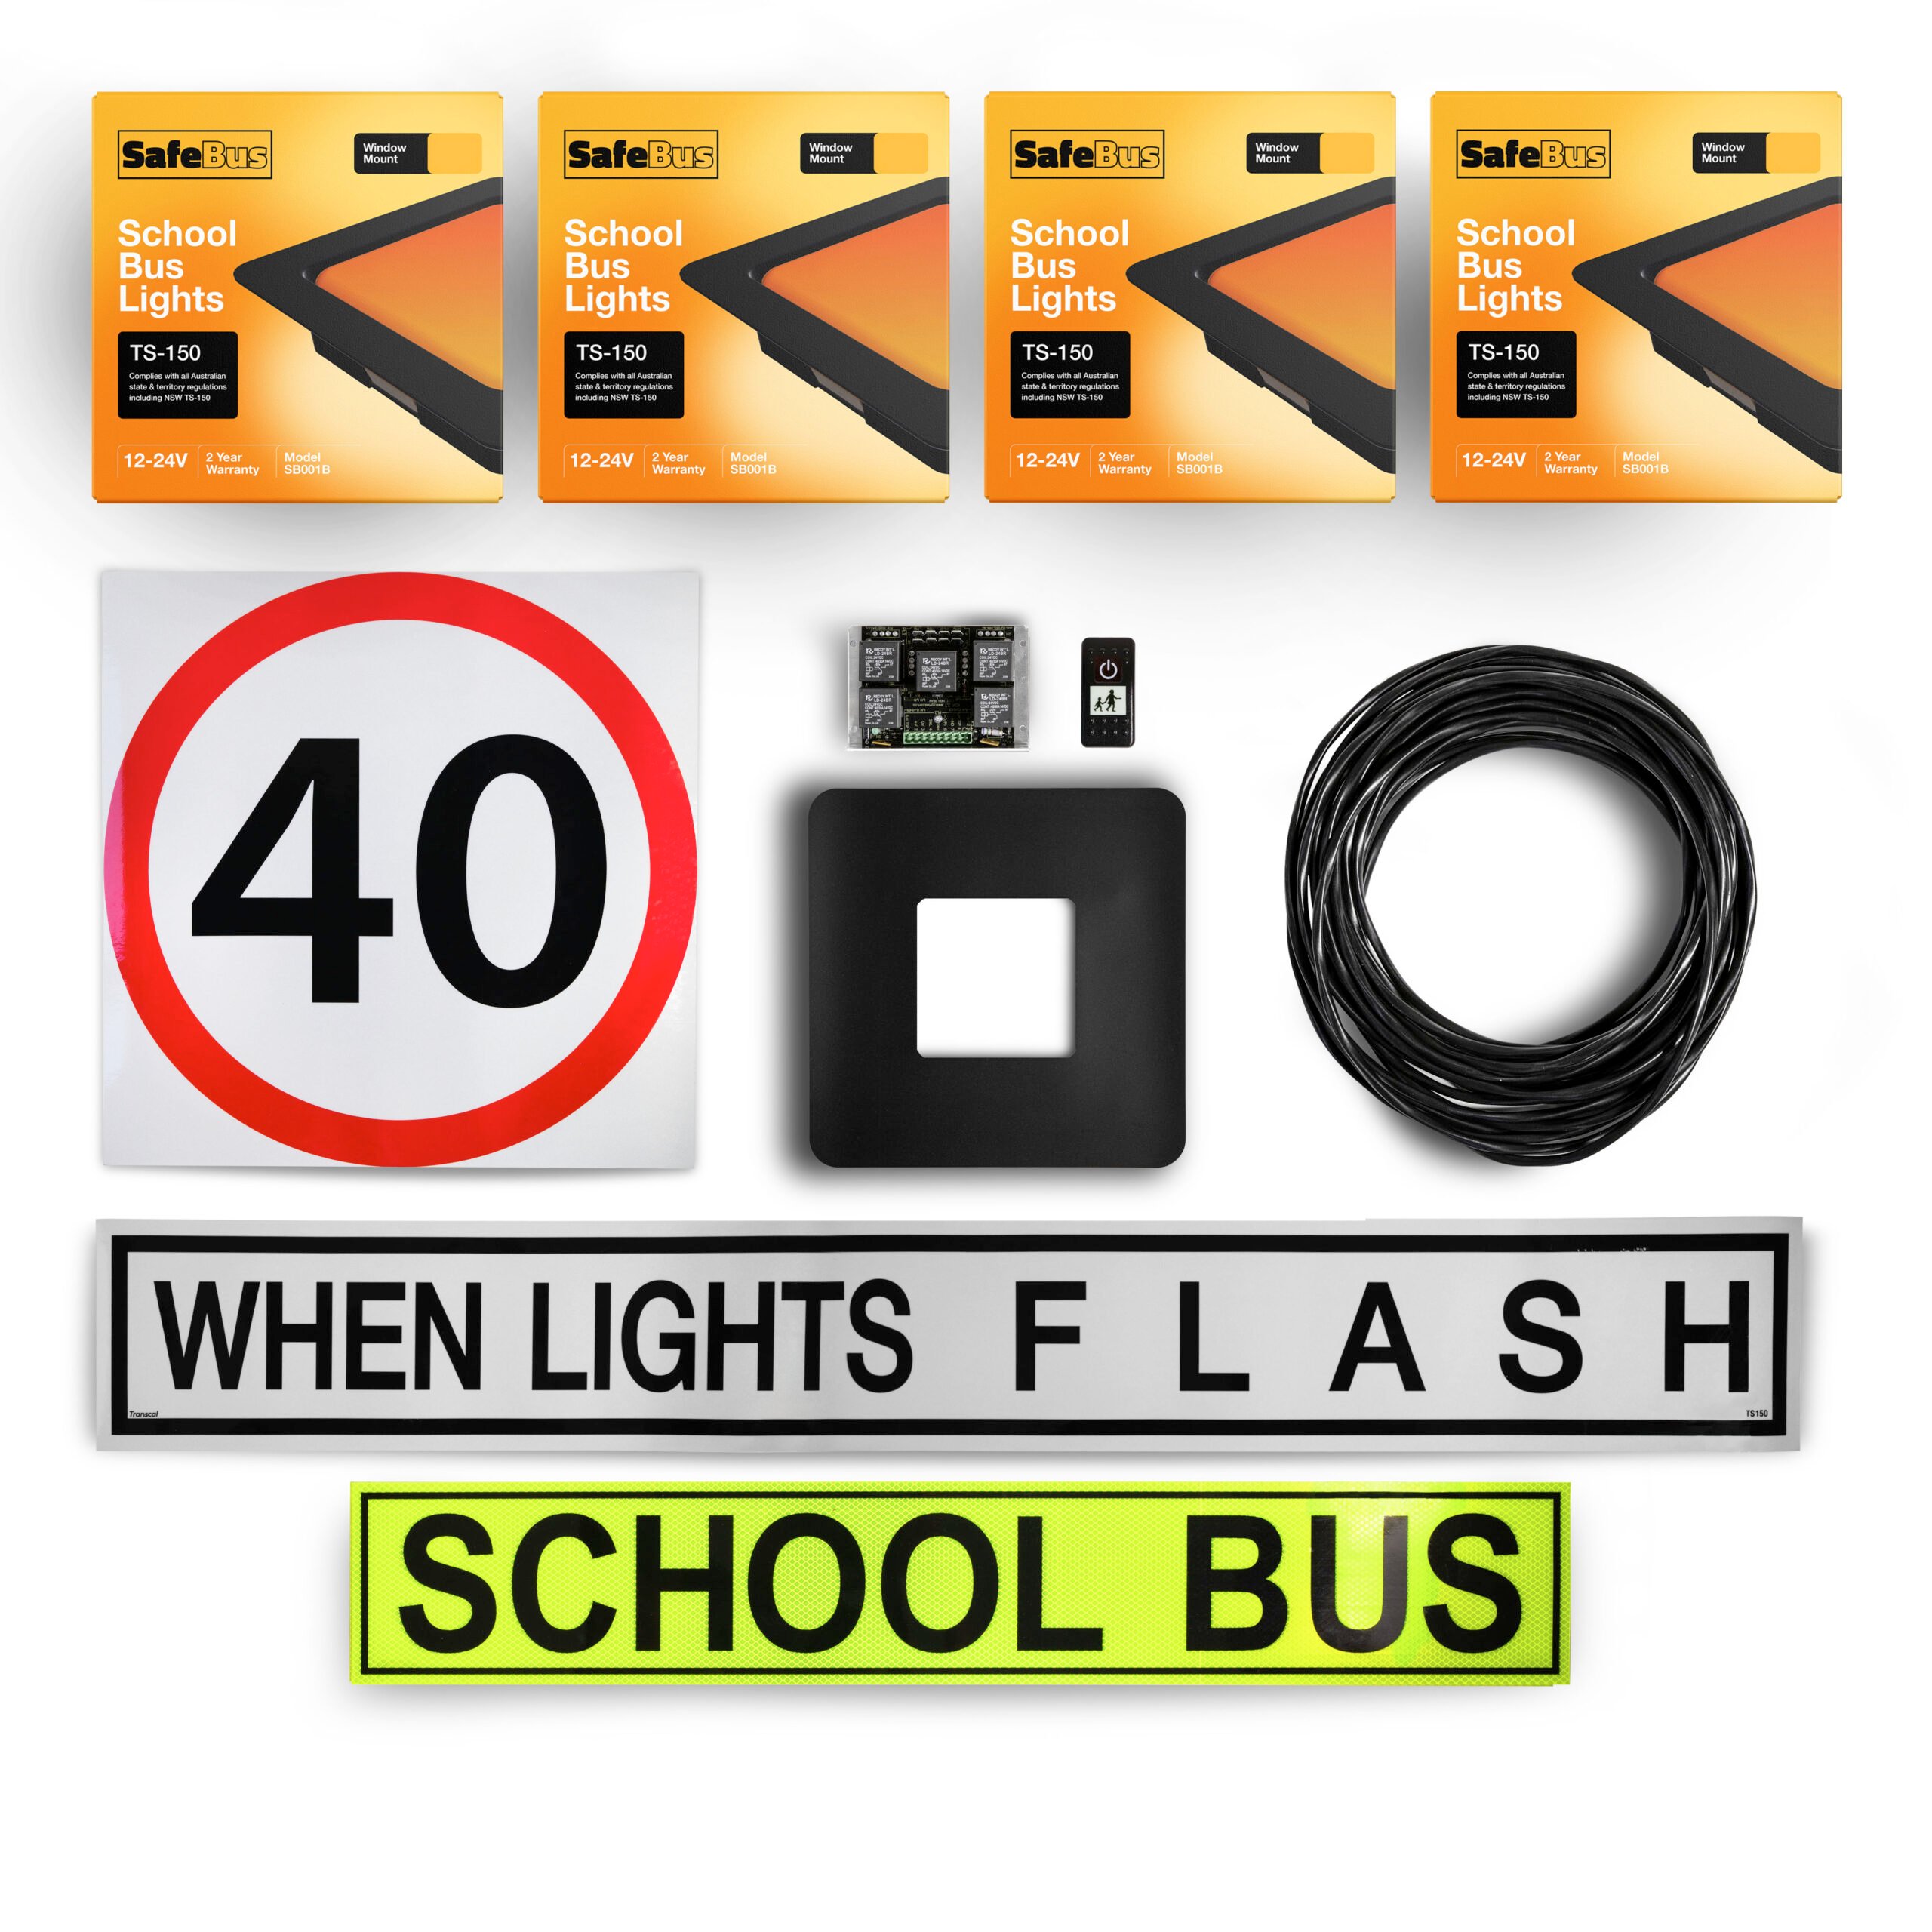 NSW TS150 school bus light kit with Safebus SB001B lights & signage